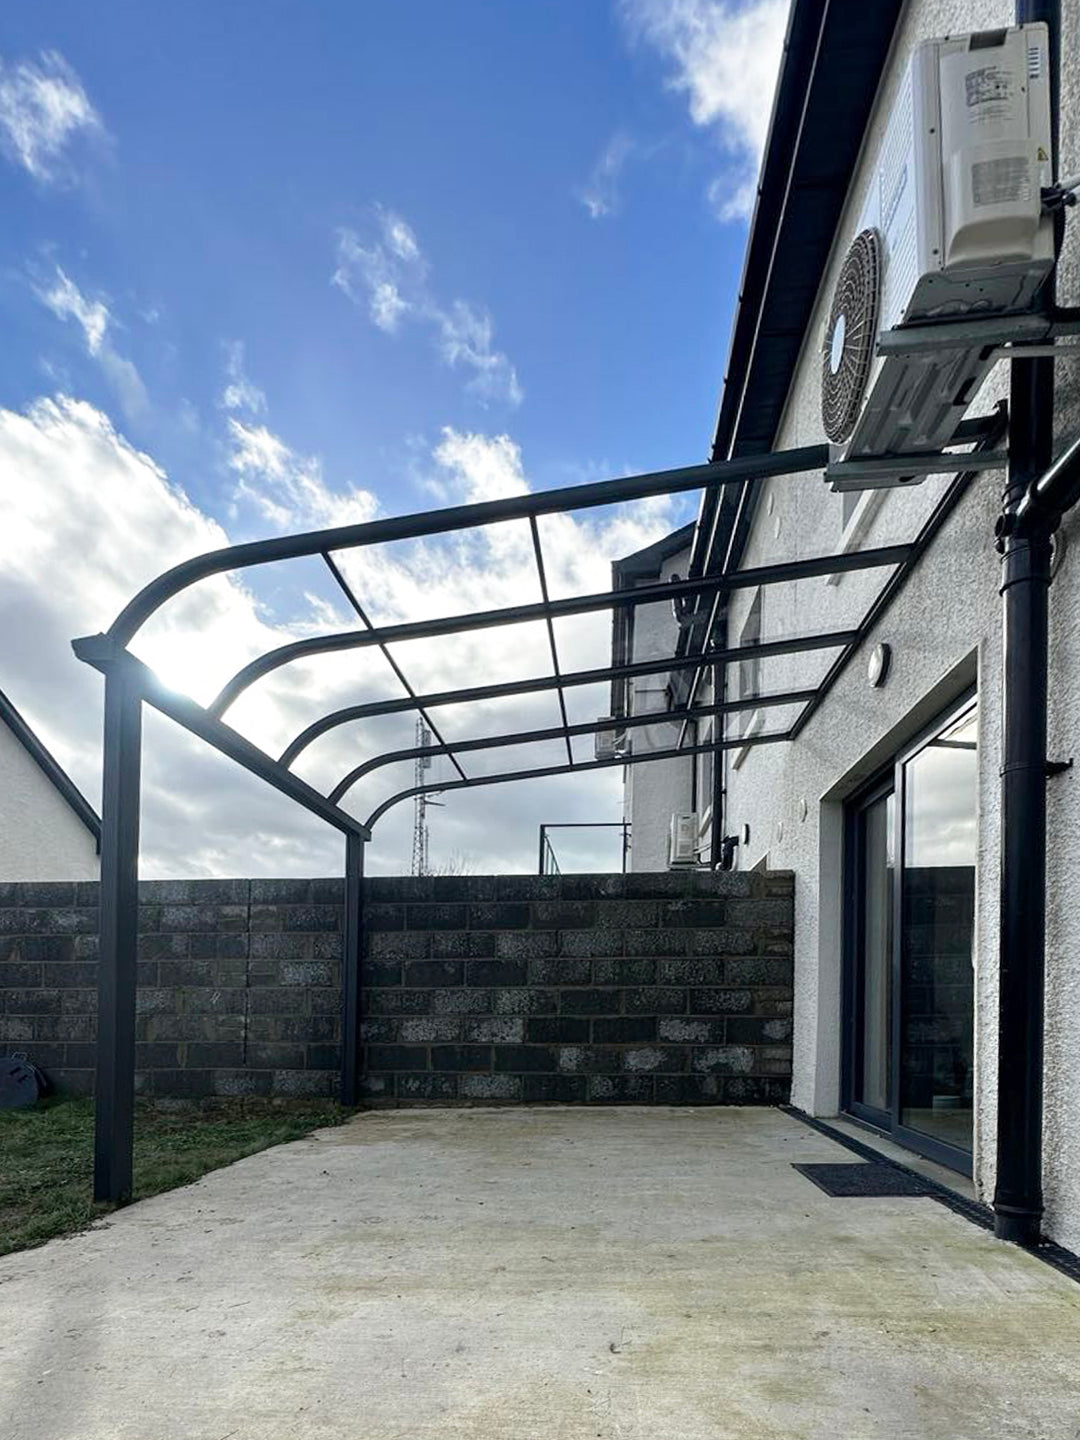 Aluminium canopy installed in Gorey Co Wexford